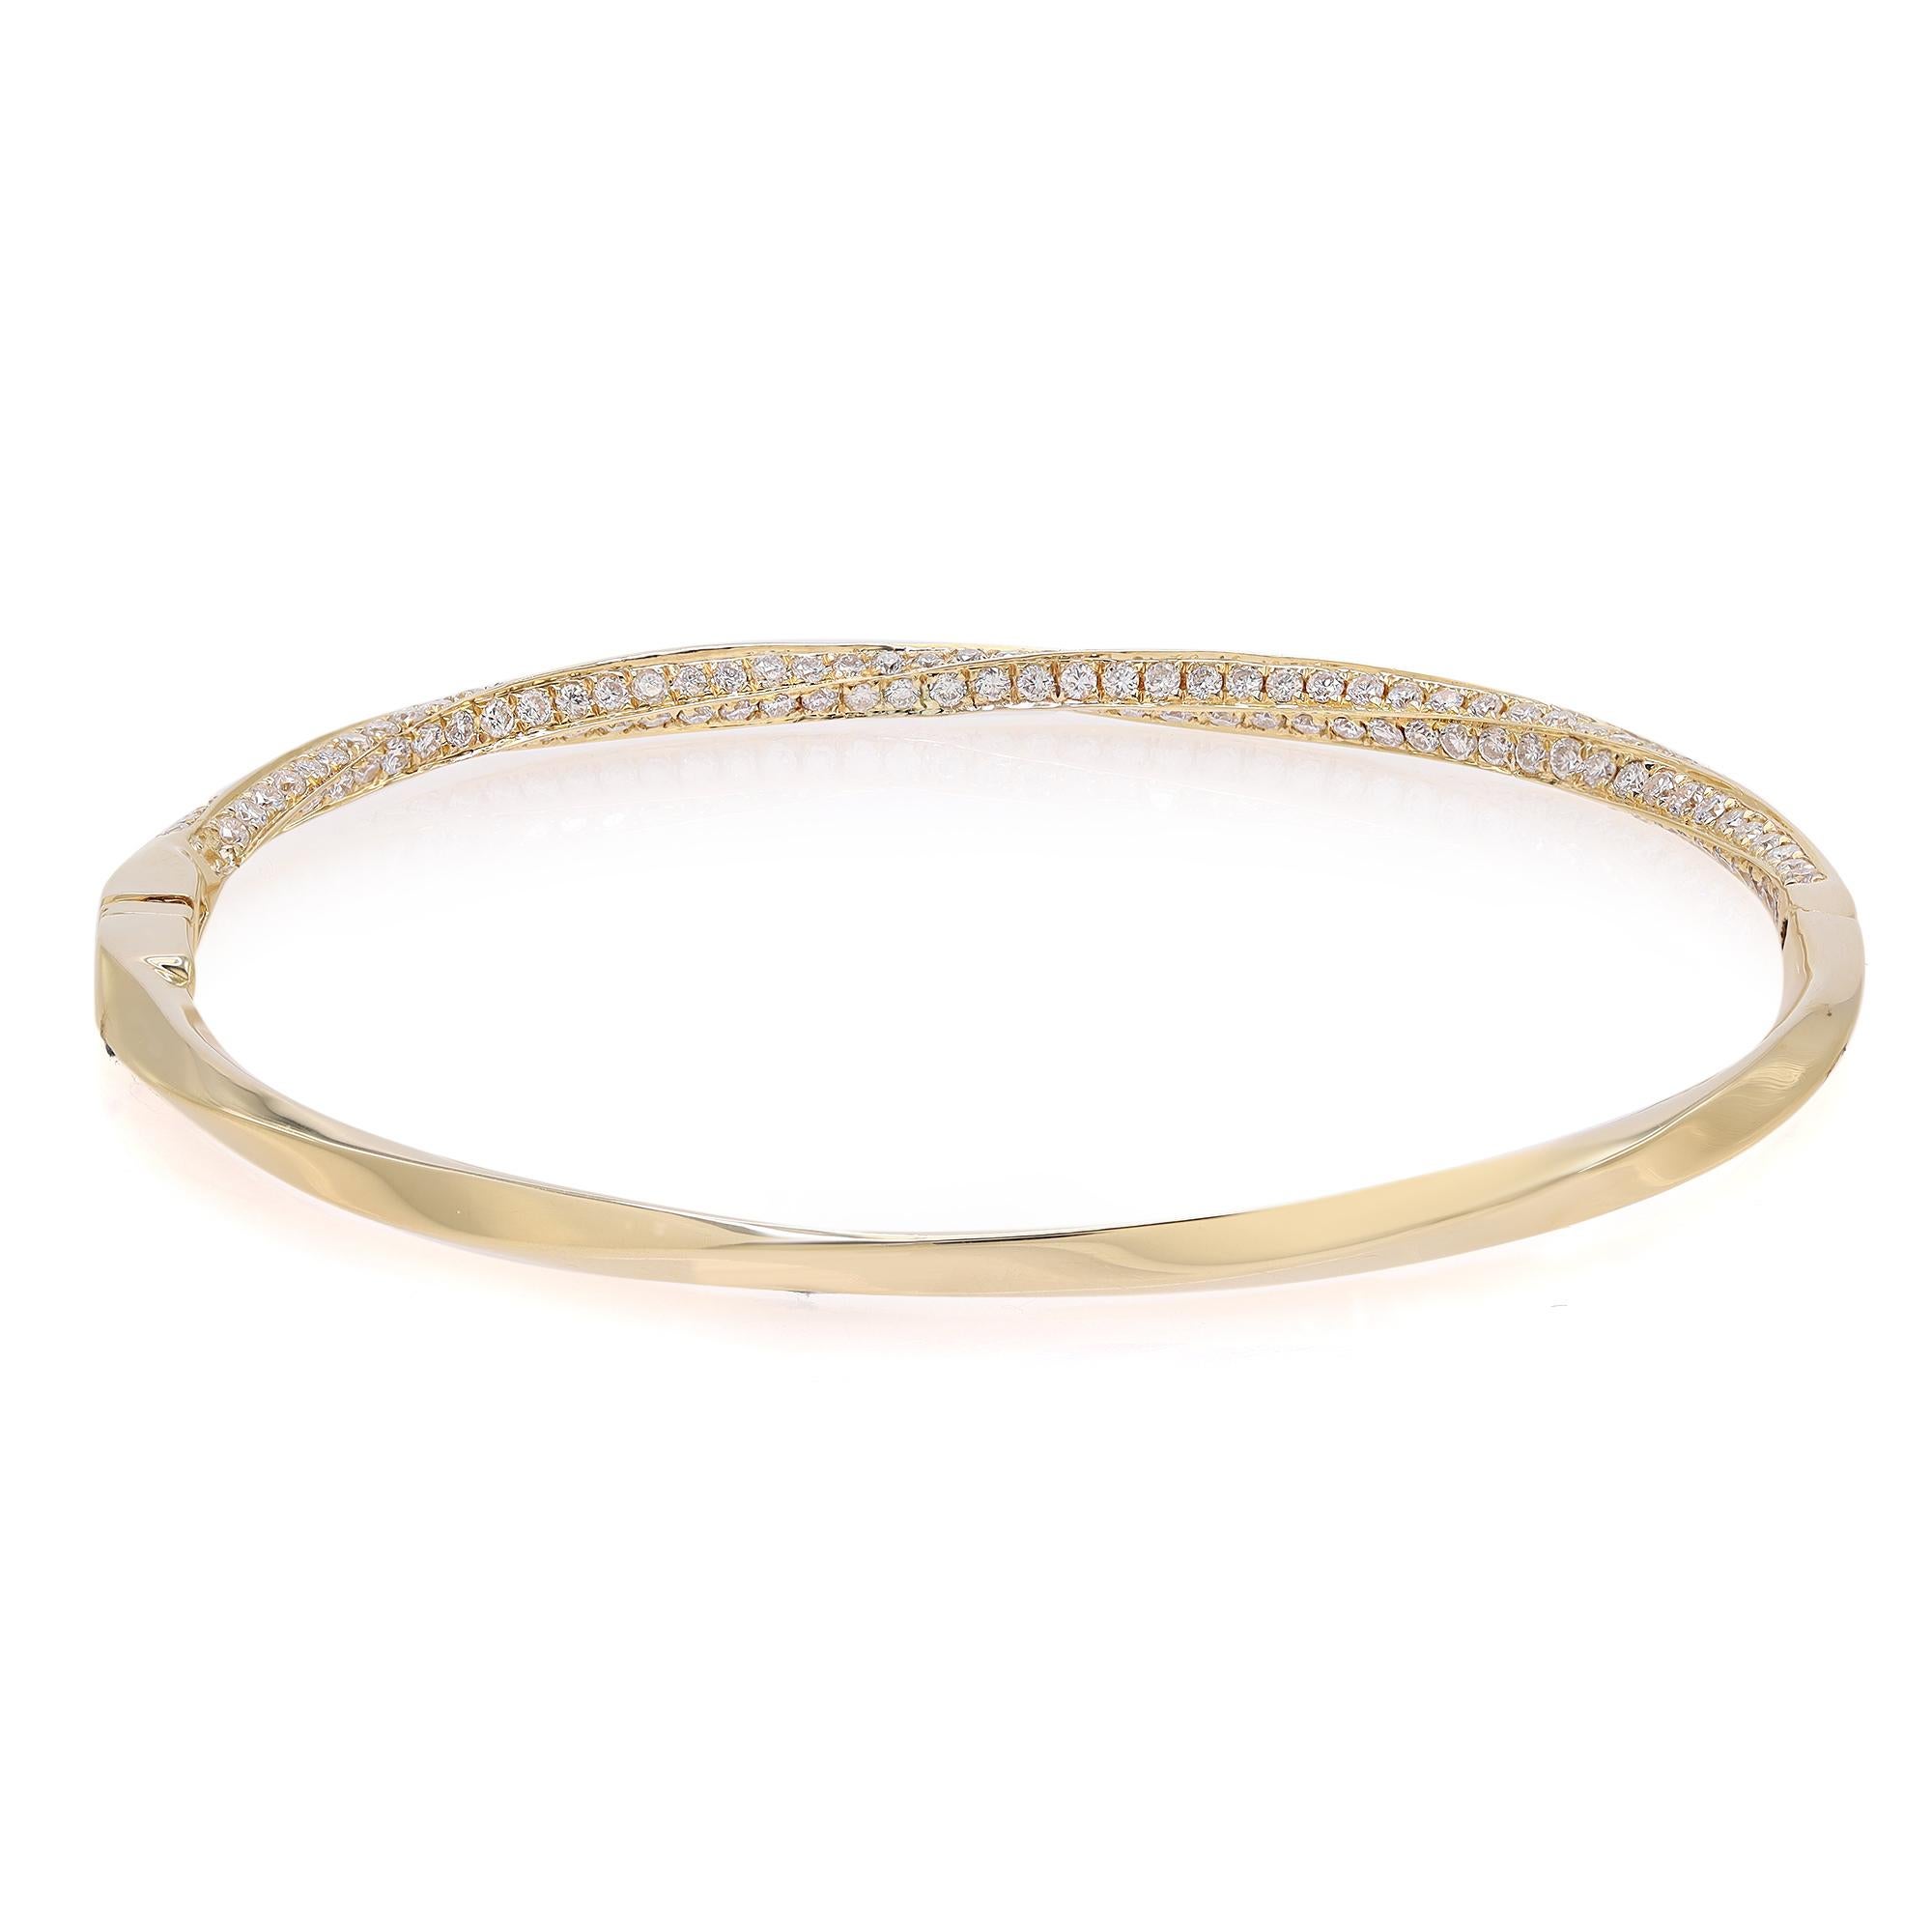 Modern Rachel Koen Pave Set Round Cut Diamond Bangle Bracelet 18k Yellow Gold 2.05Cttw For Sale